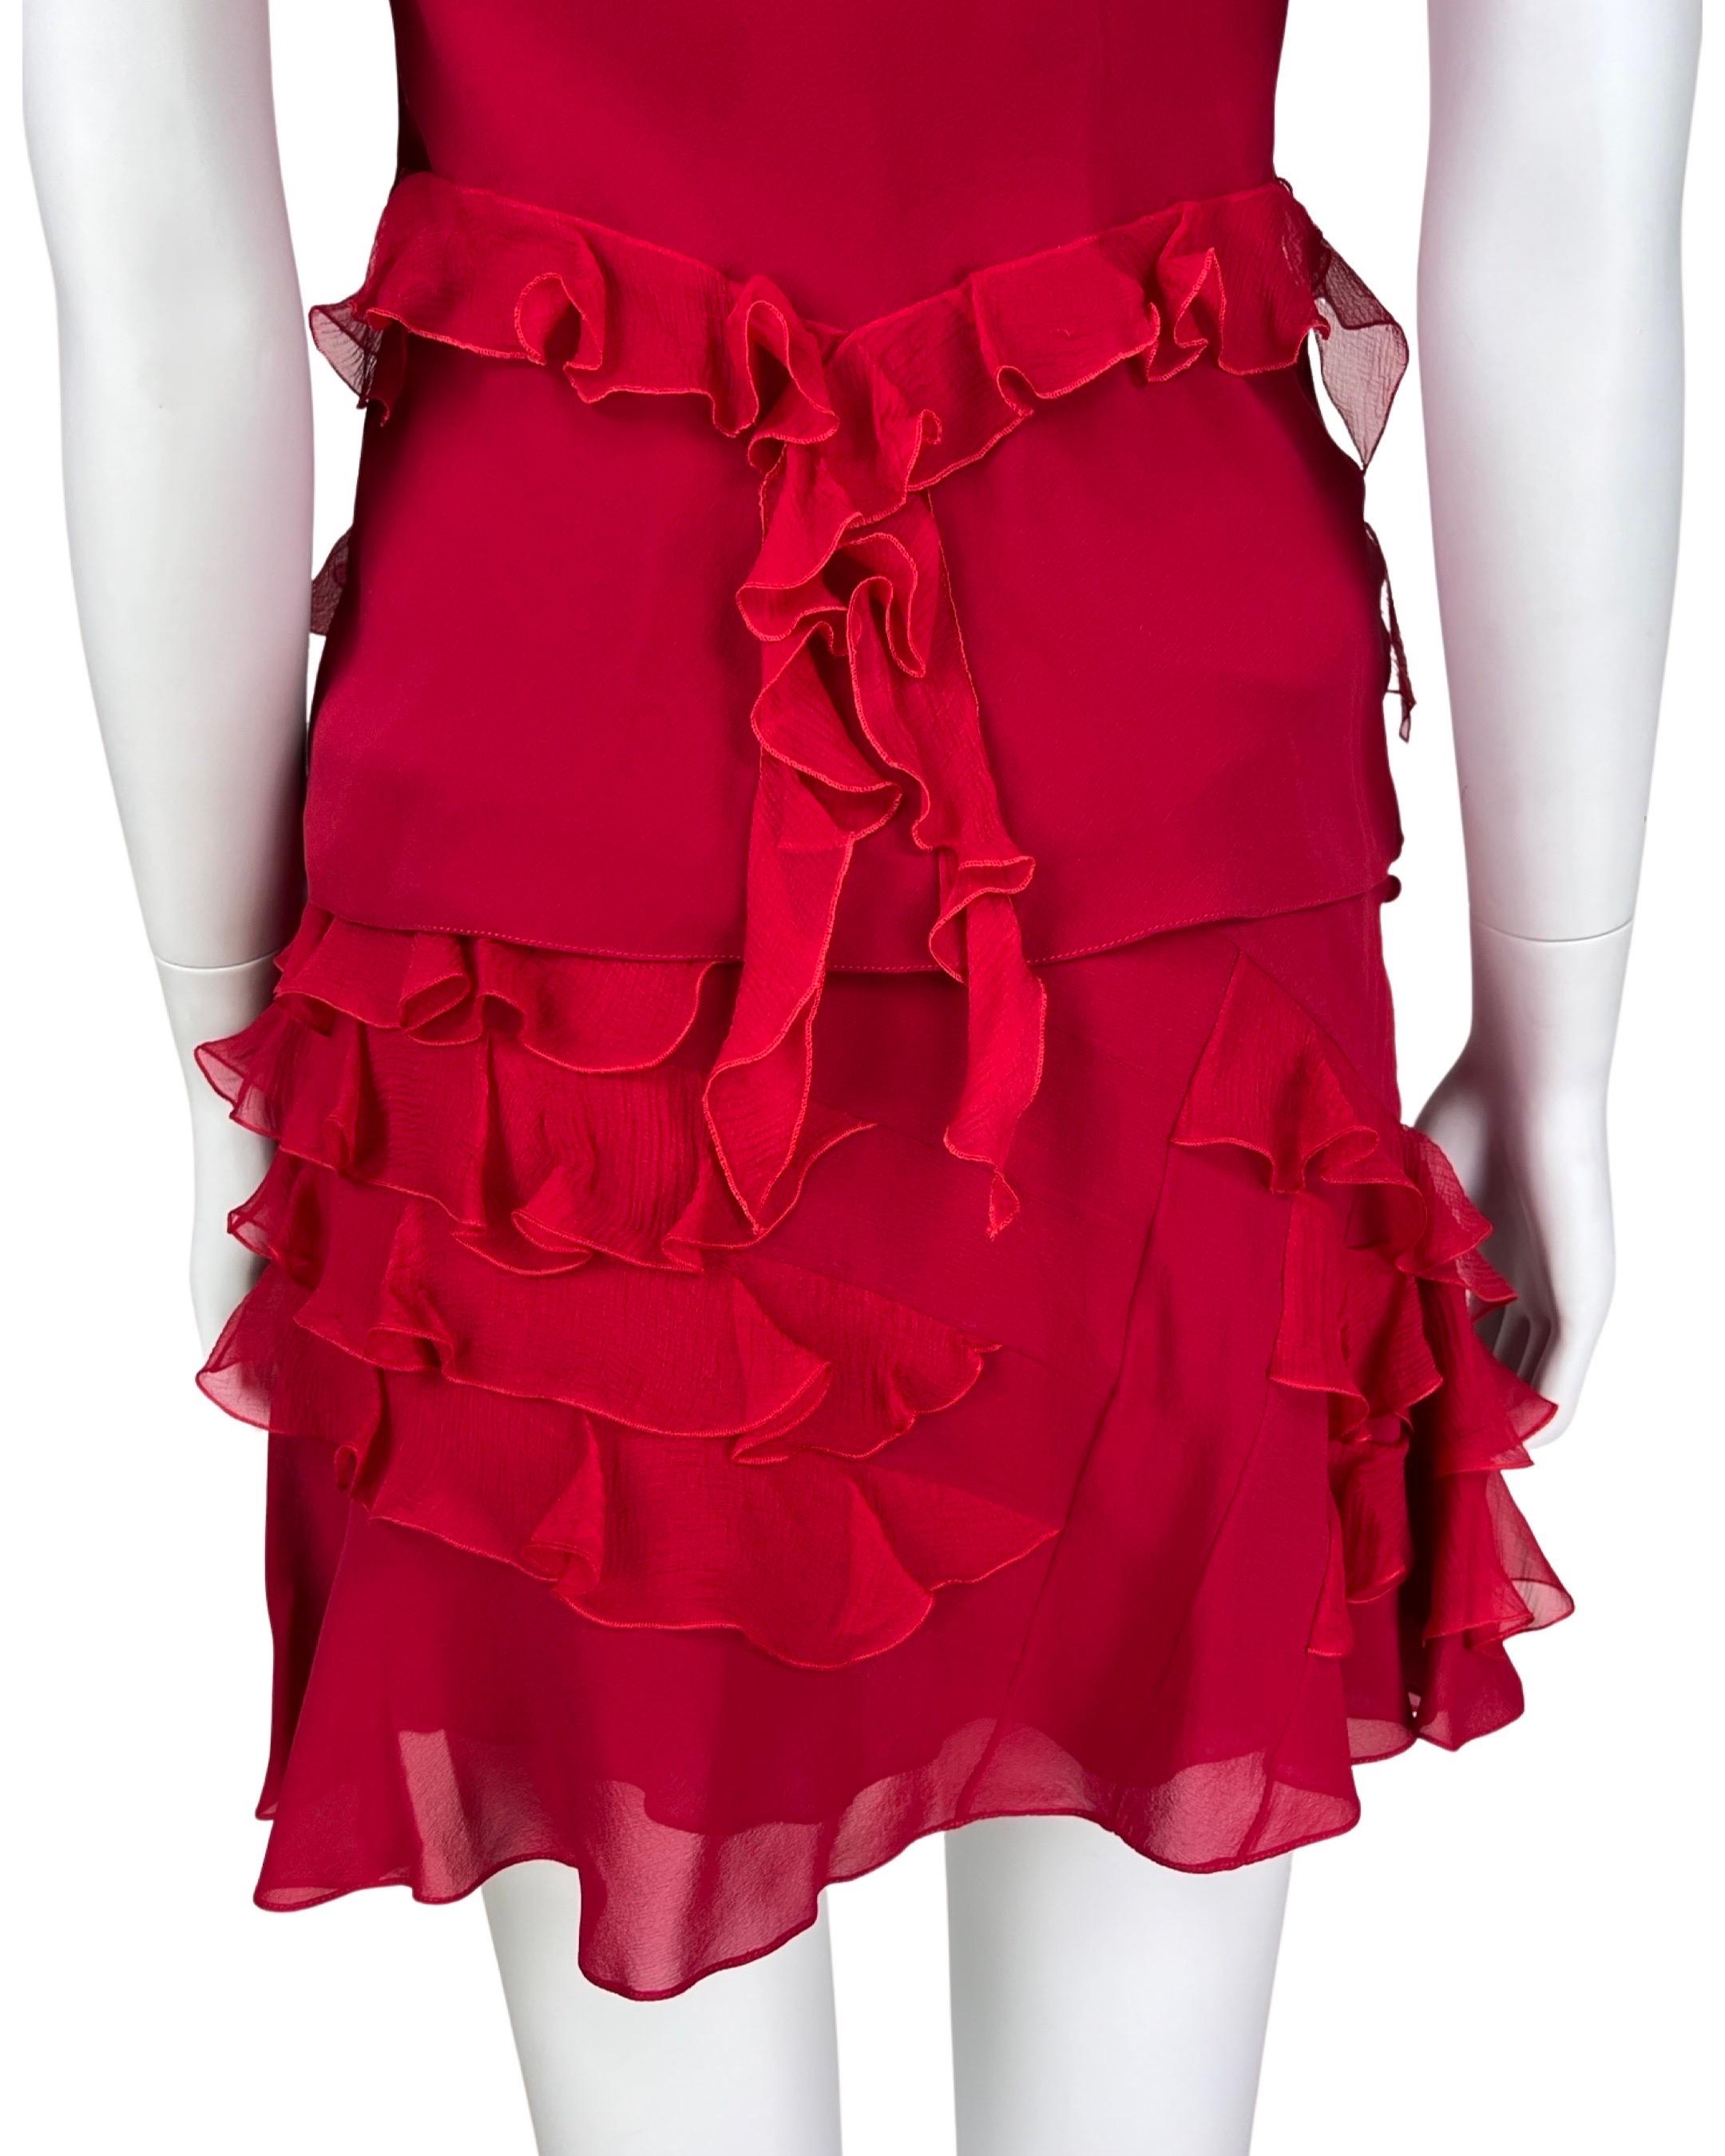 Dior by John Galliano Fall 2004 Red Ruffled Silk Set 7